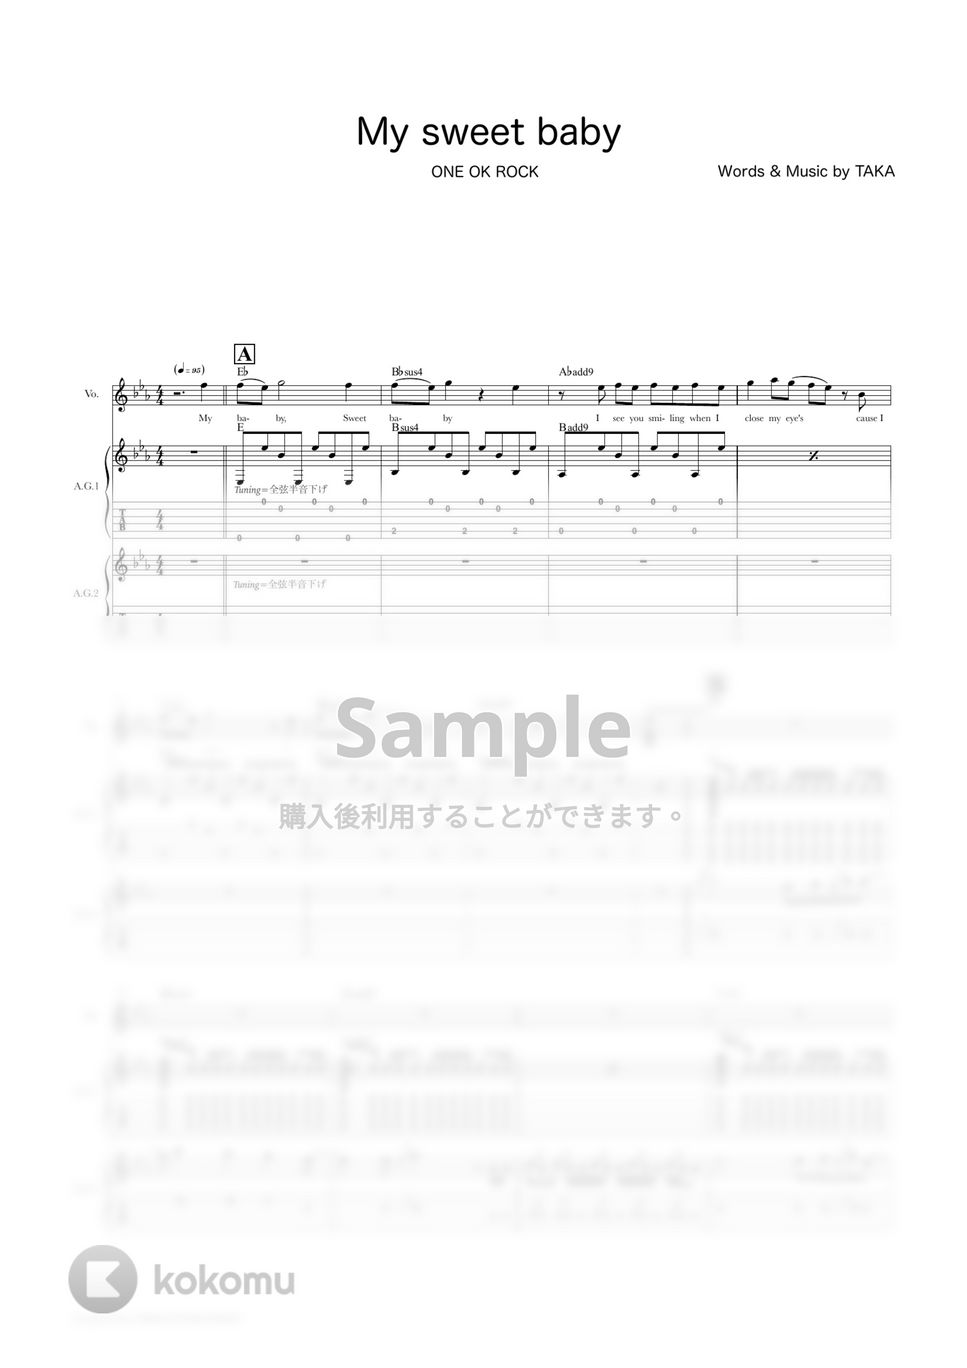 SCHOOL　ROCK　タブ　ONE　GUITAR　sweet　by　baby　OK　五線譜　TRIAD　My　(ギタースコア・歌詞・コード付き)